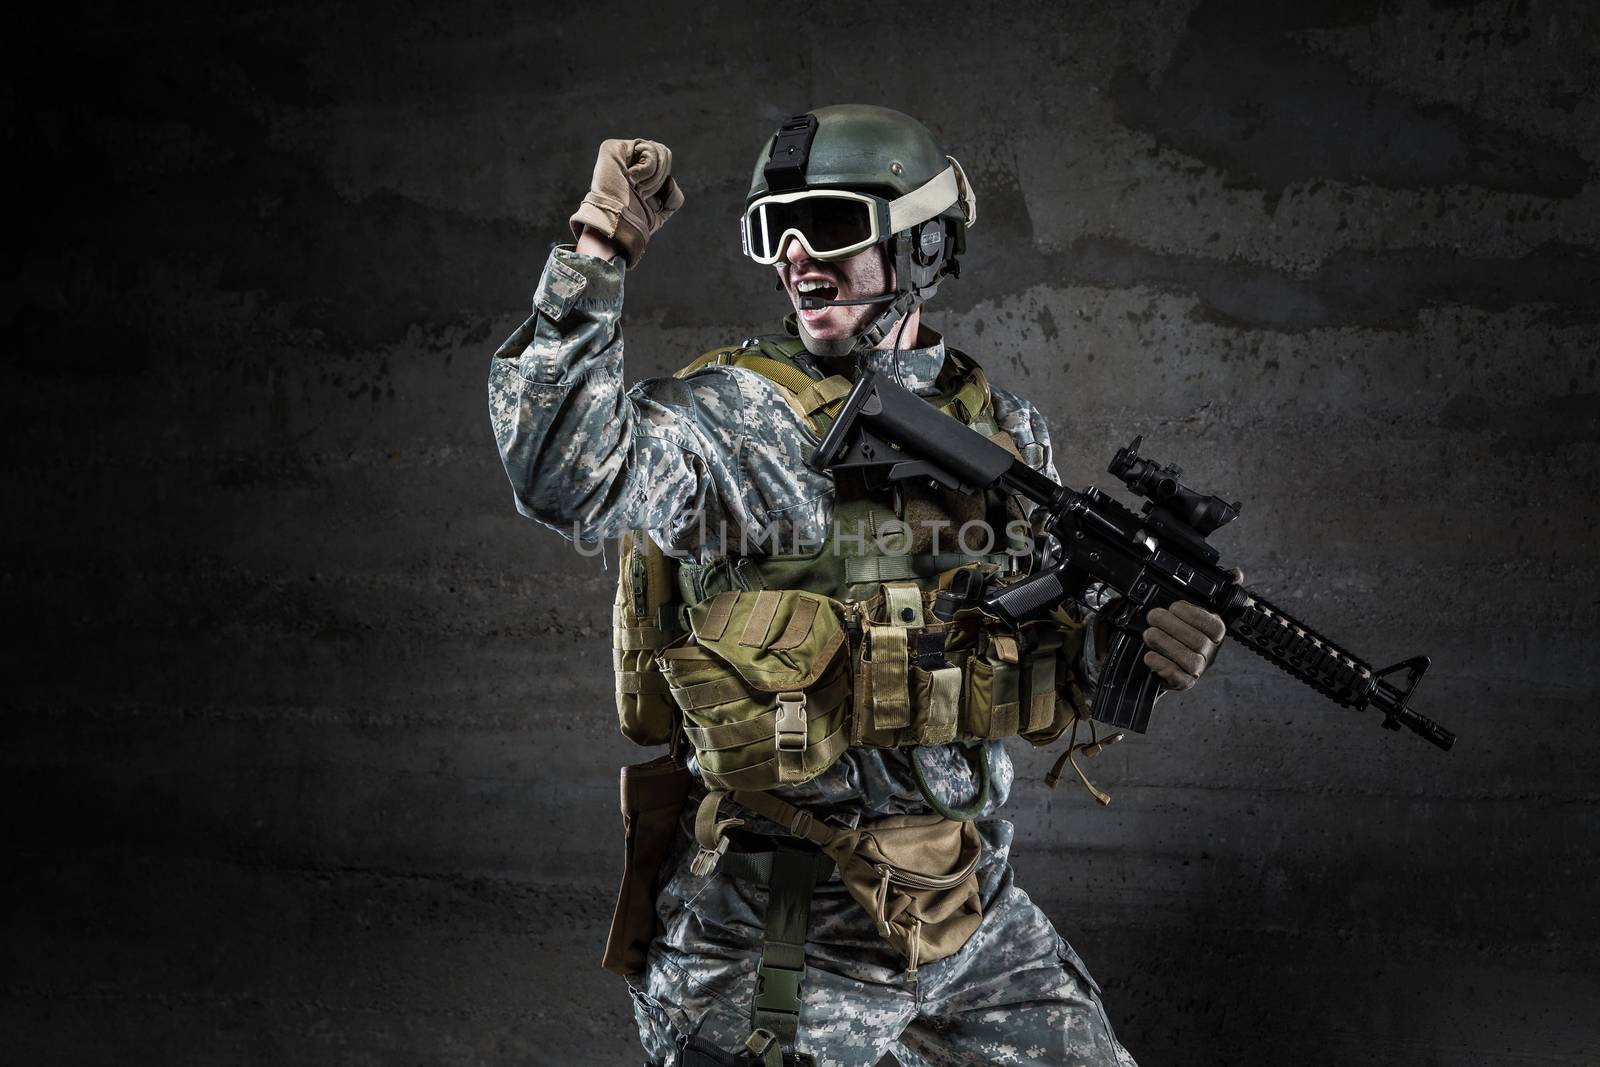 American Soldier shouting on dark background